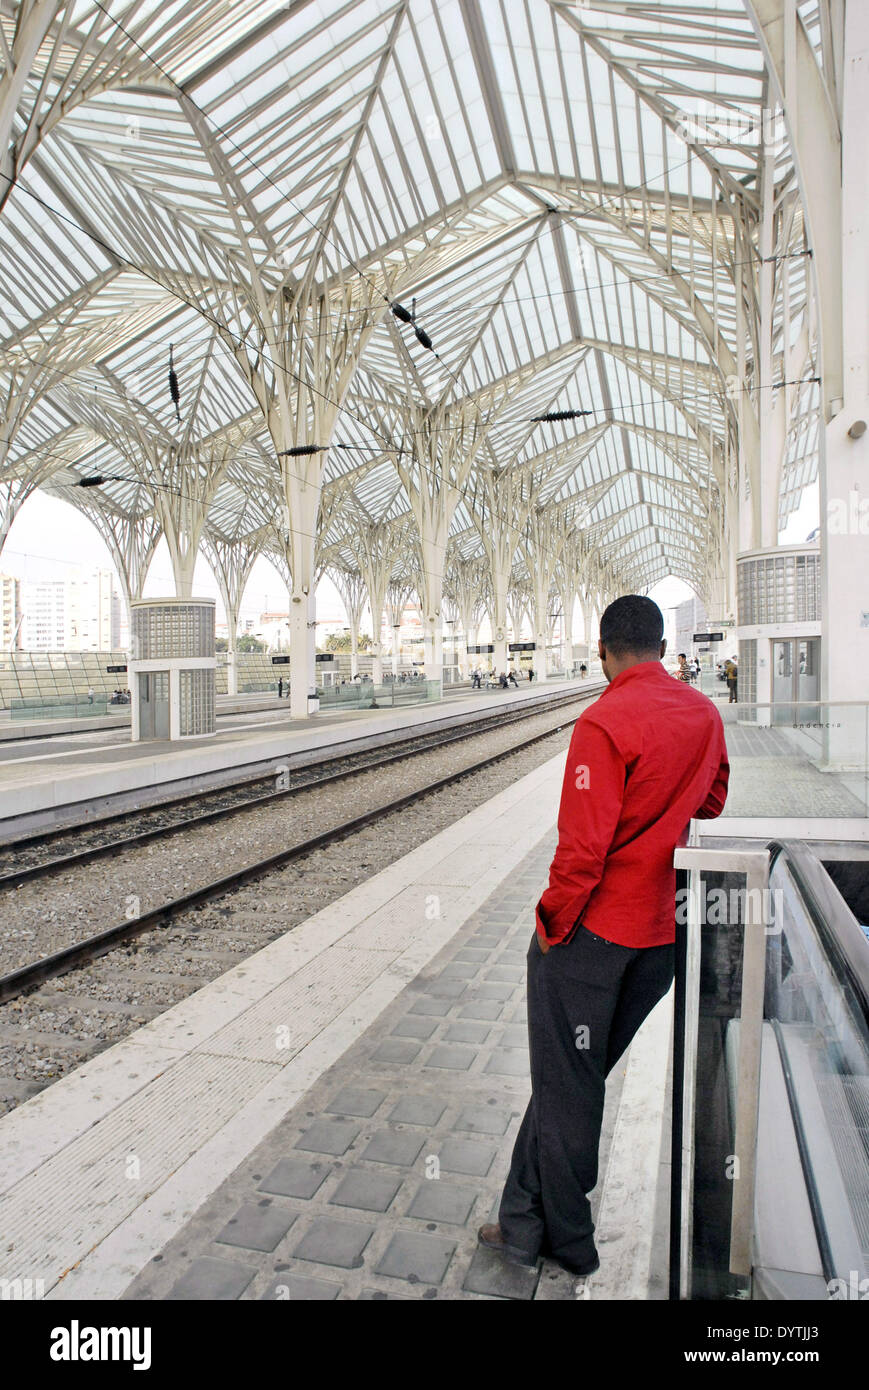 Gare do Oriente (Lisbon Orient Station) Stock Photo